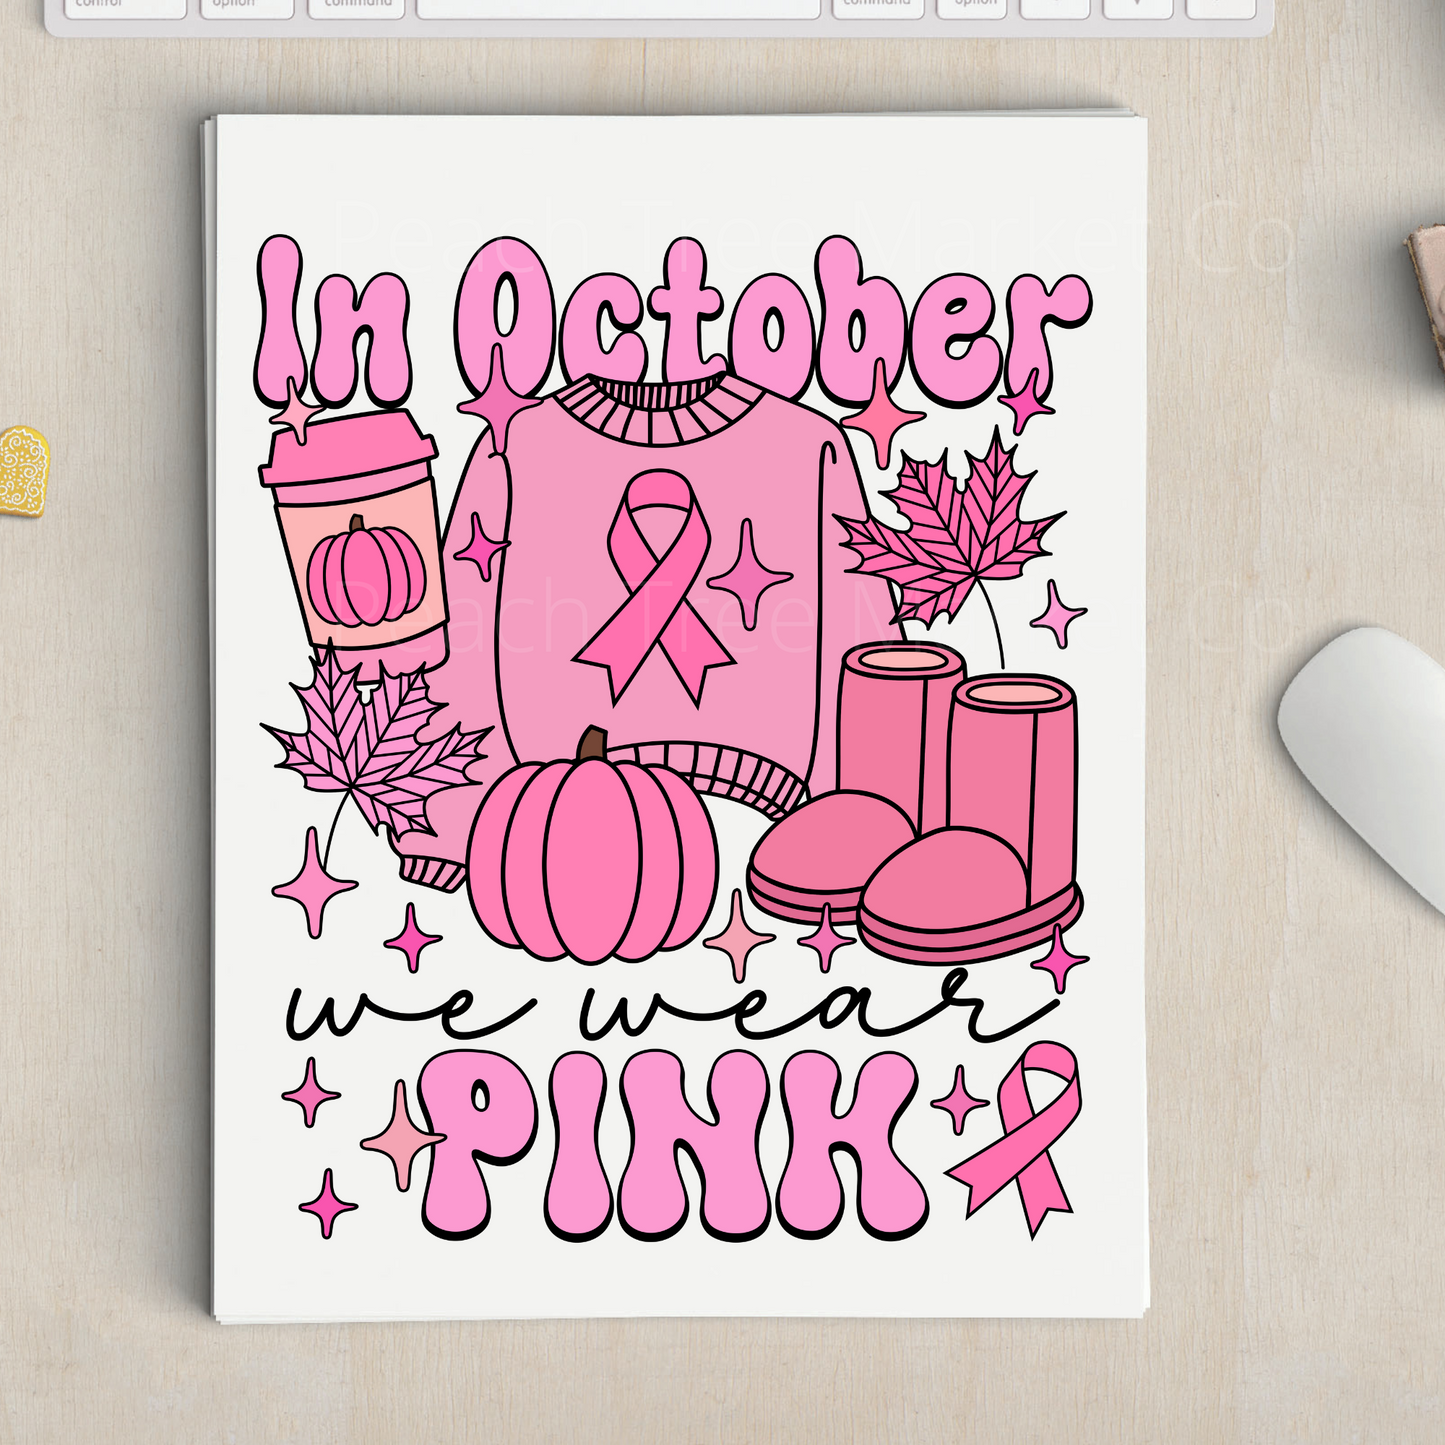 In October We wear pink Sublimation Transfer